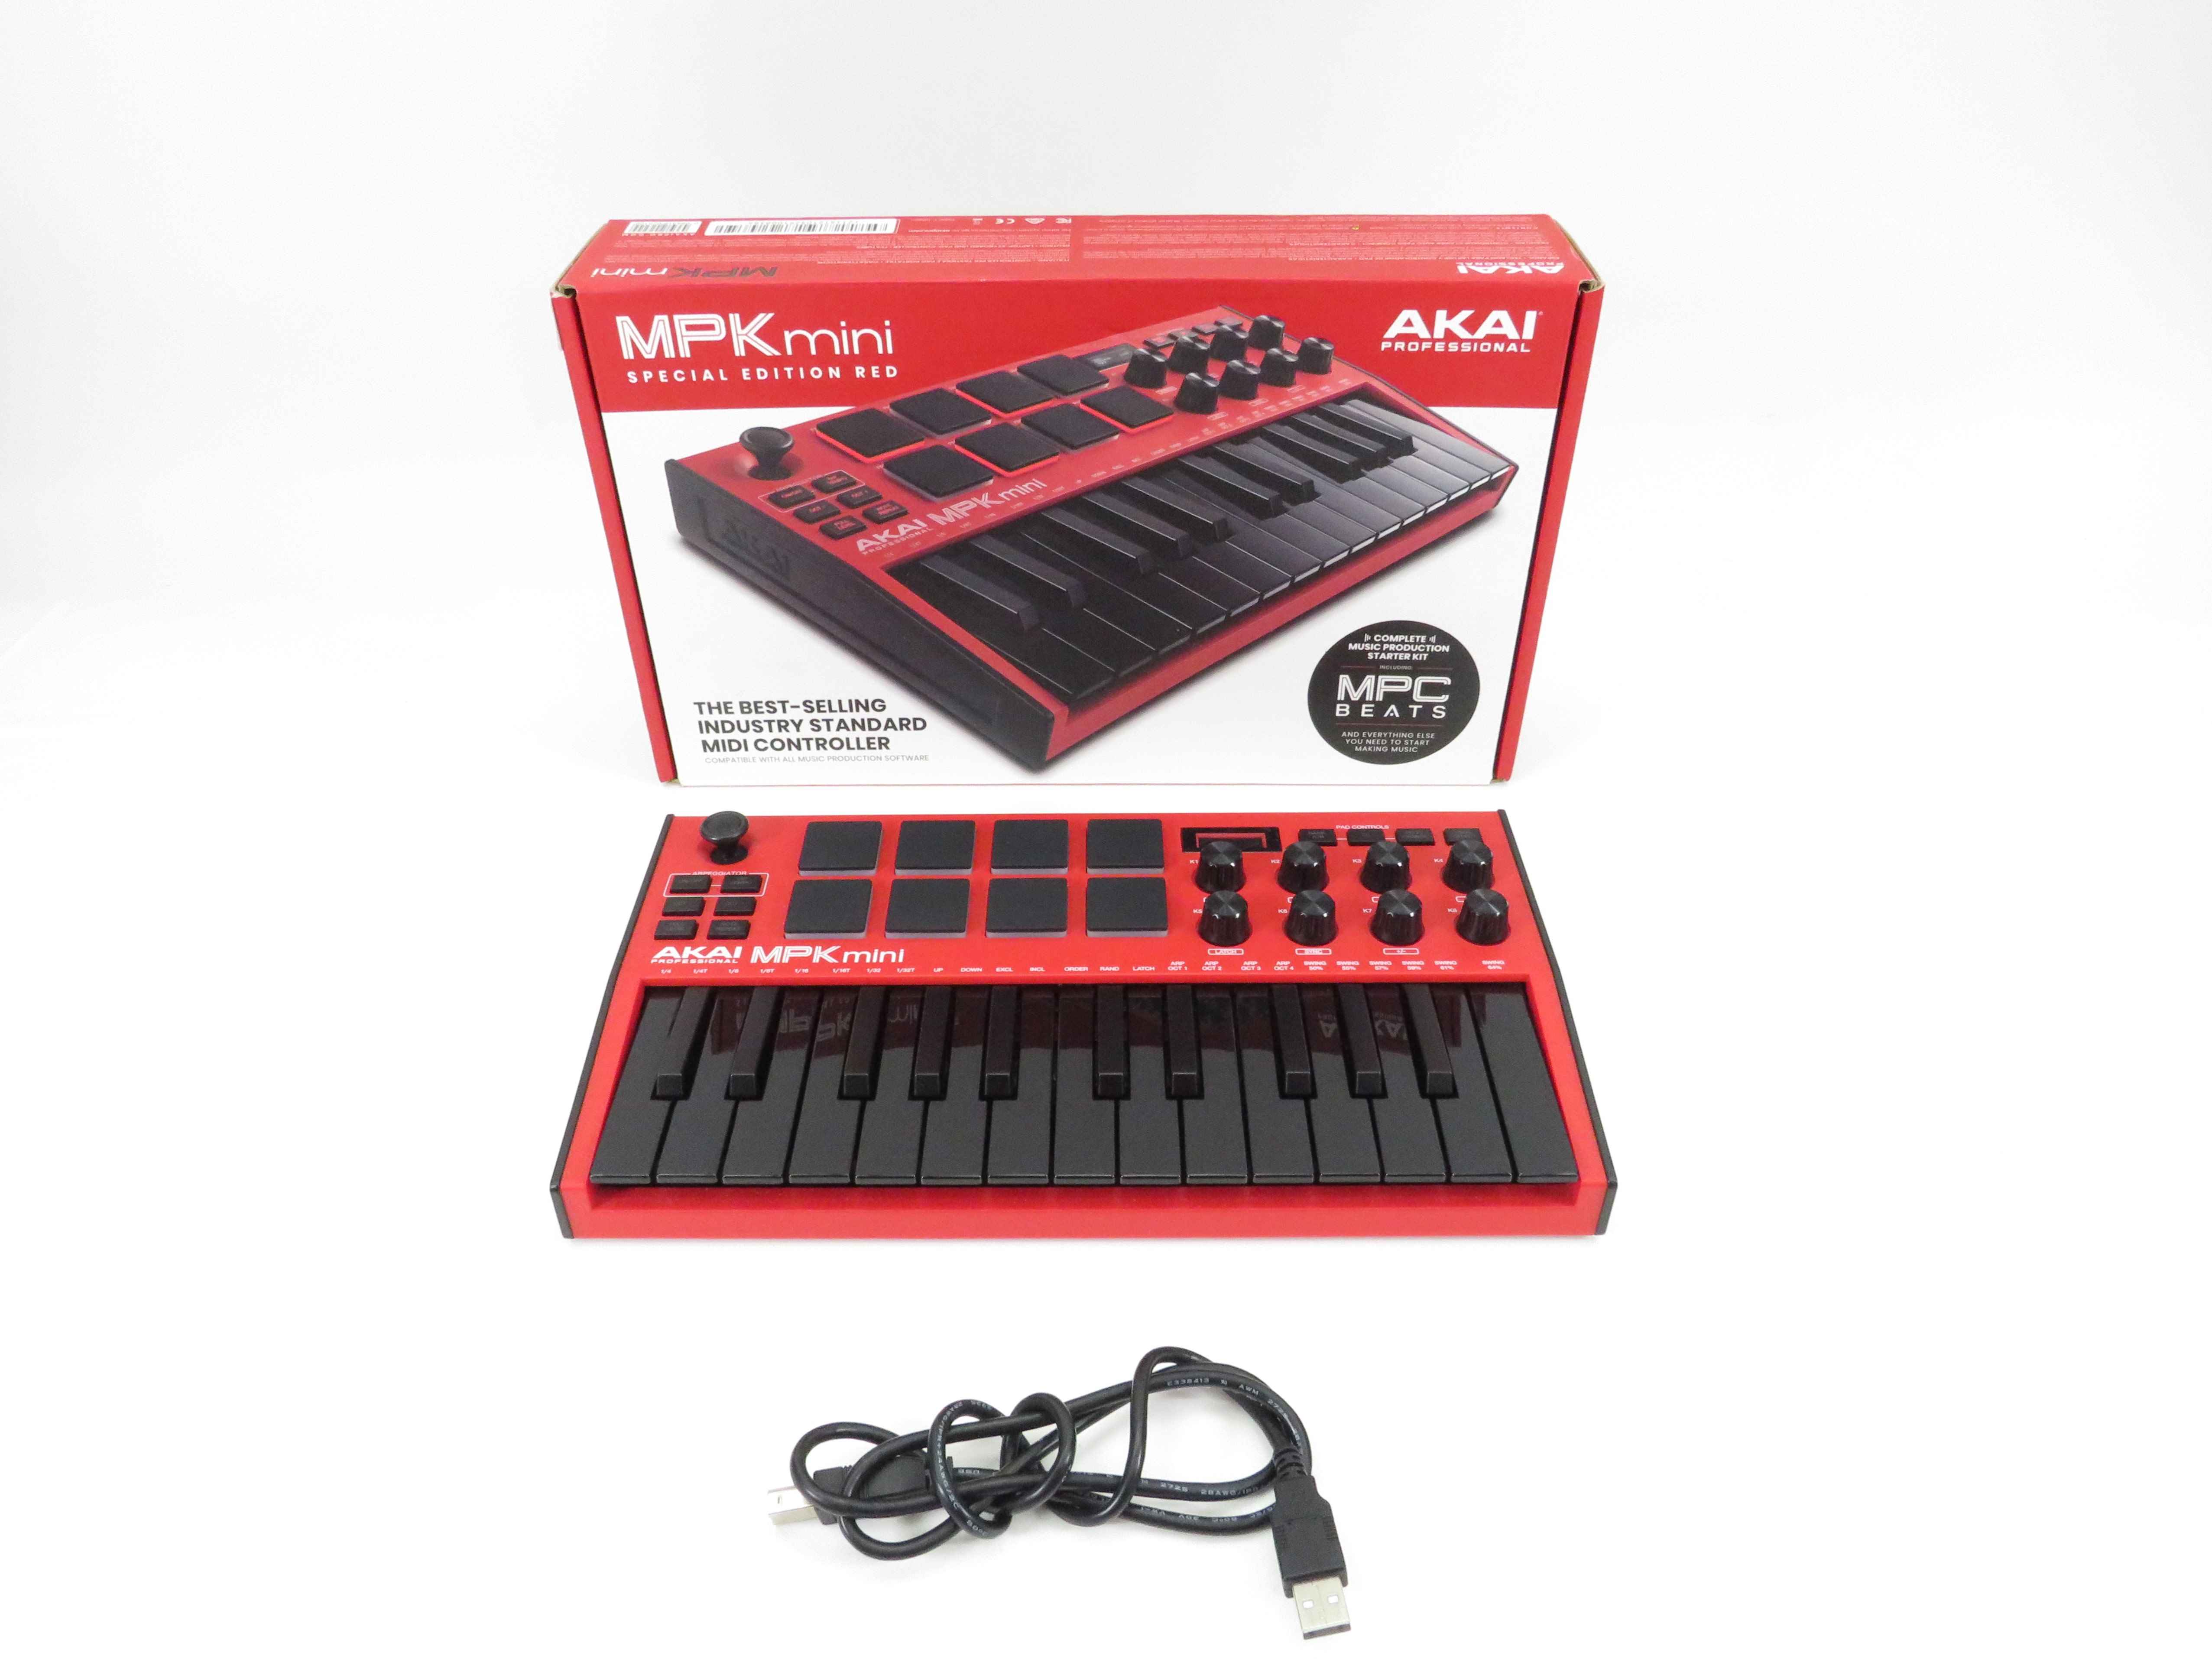 AKAI MPK mini MK3 Professional MIDI Keyboard Controller Red New in Box